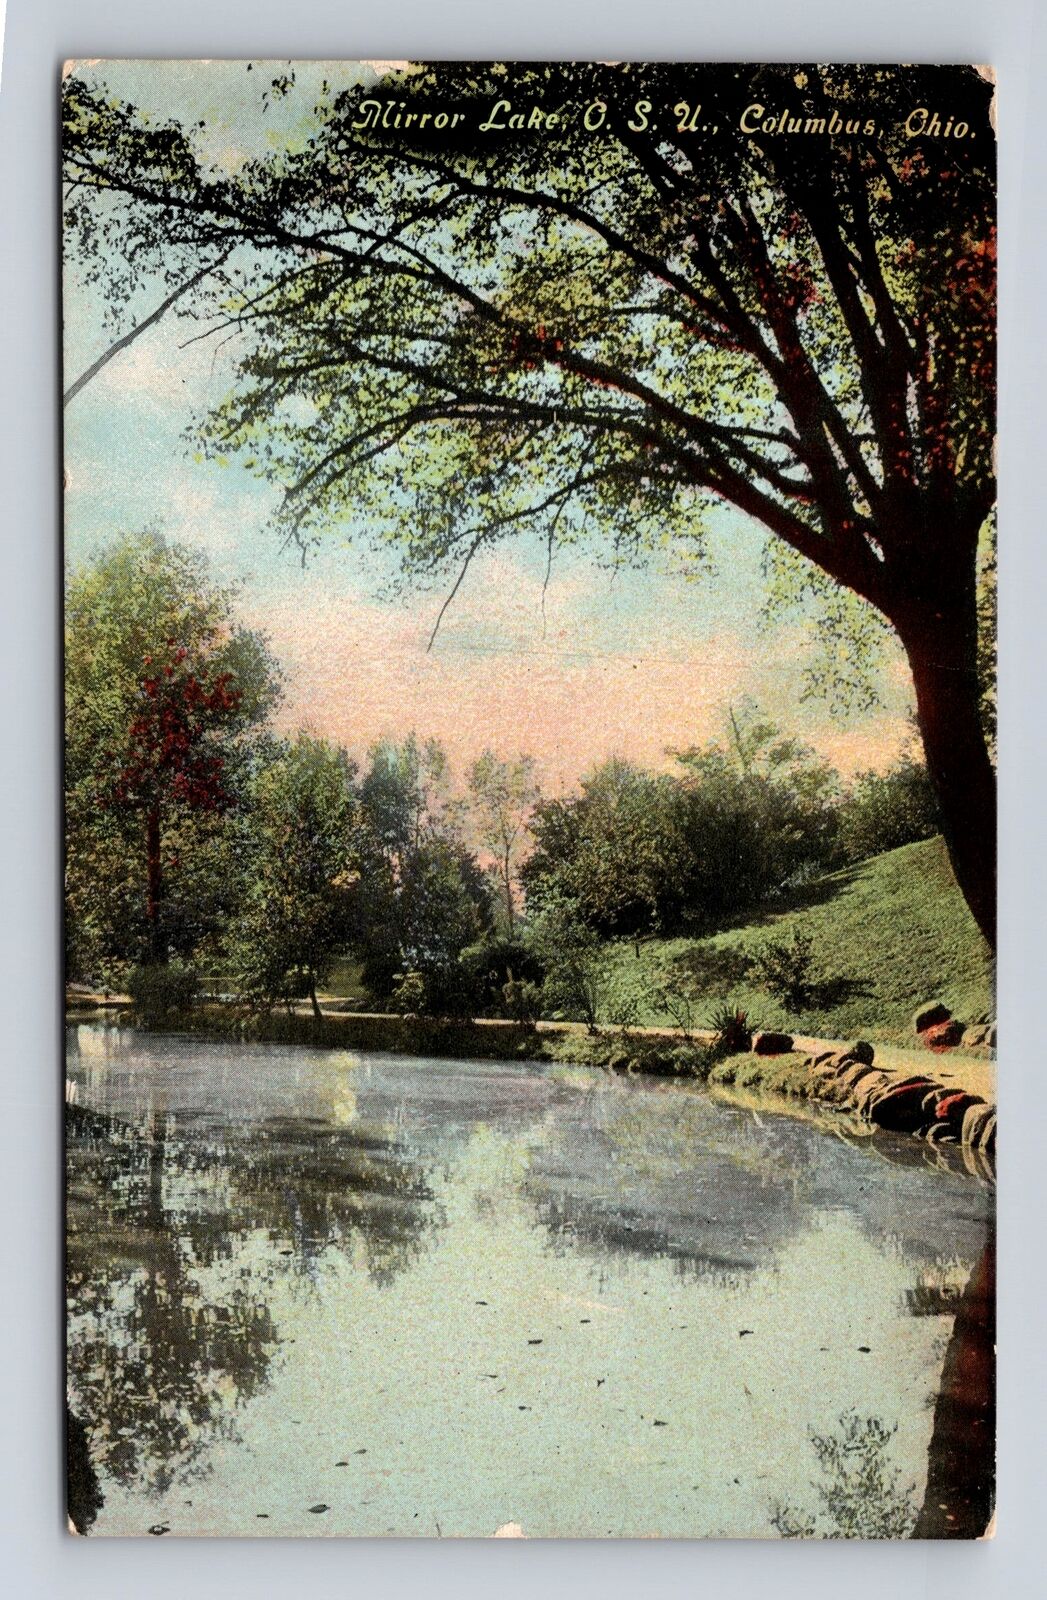 Columbus OH-Ohio, Mirror Lake, Antique, Vintage Souvenir Postcard